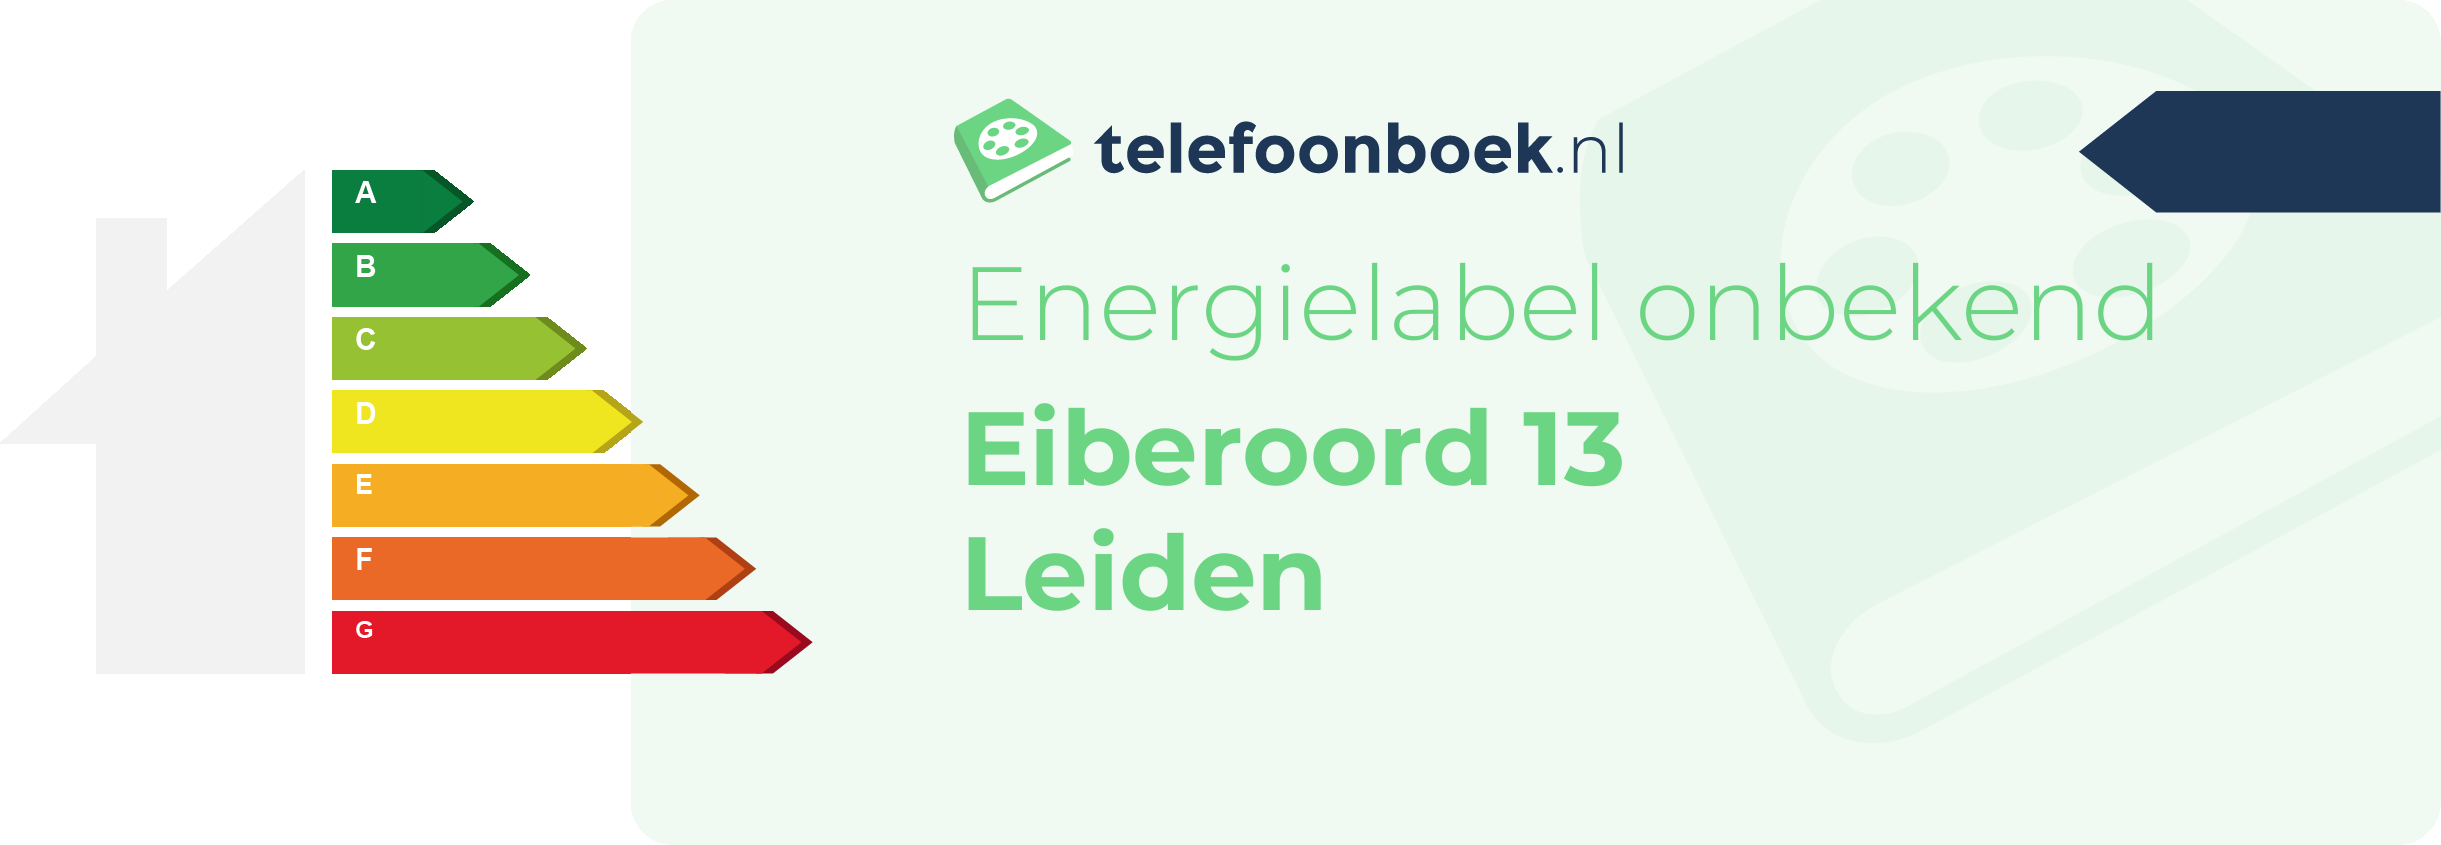 Energielabel Eiberoord 13 Leiden